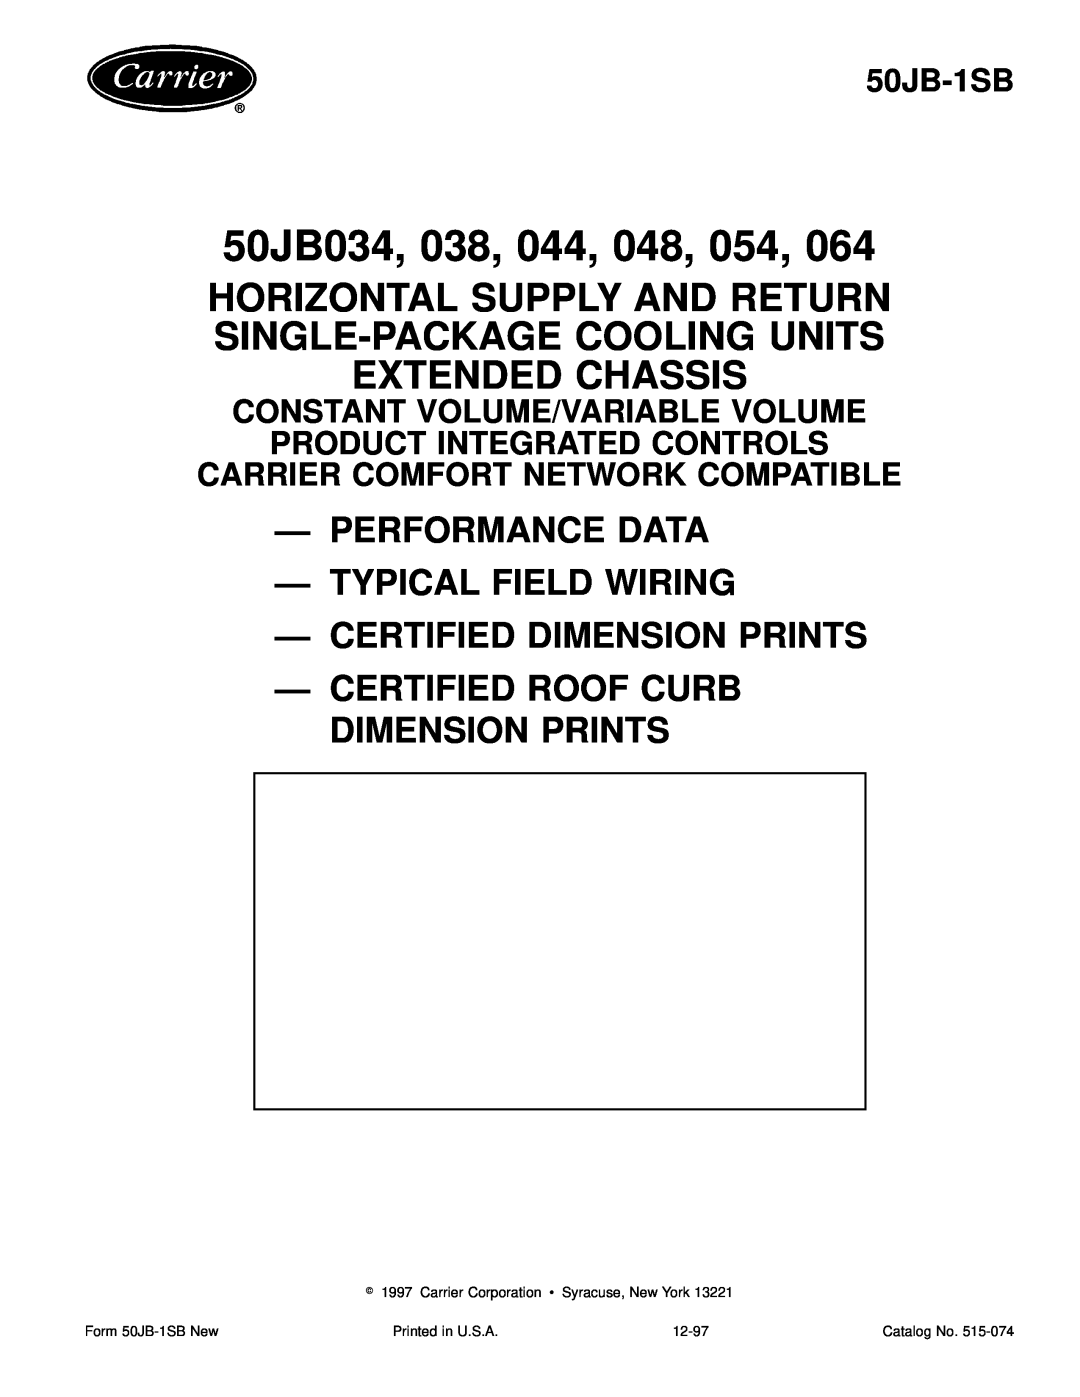 Carrier 50JB048 manual 50JB034, 038, 044, 048, 054, Horizontal Supply And Return Single-Package Cooling Units, 50JB-1SB 